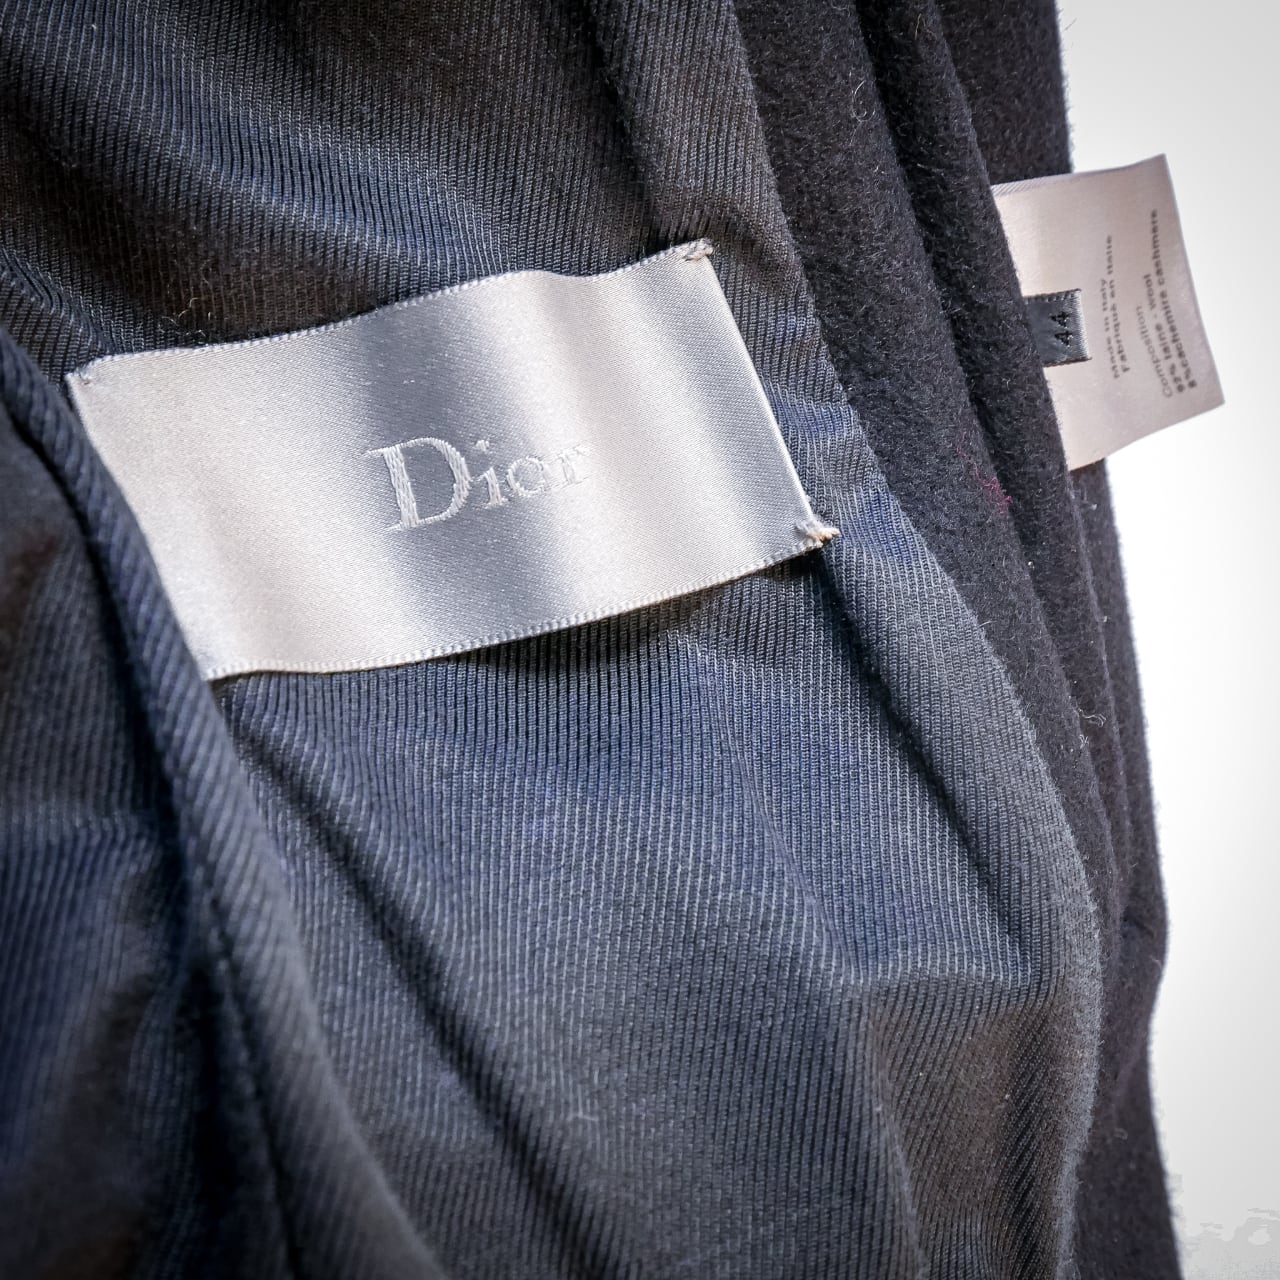 Dior homme ディオールオム ナポレオン ジャケット サイズ44 超希少